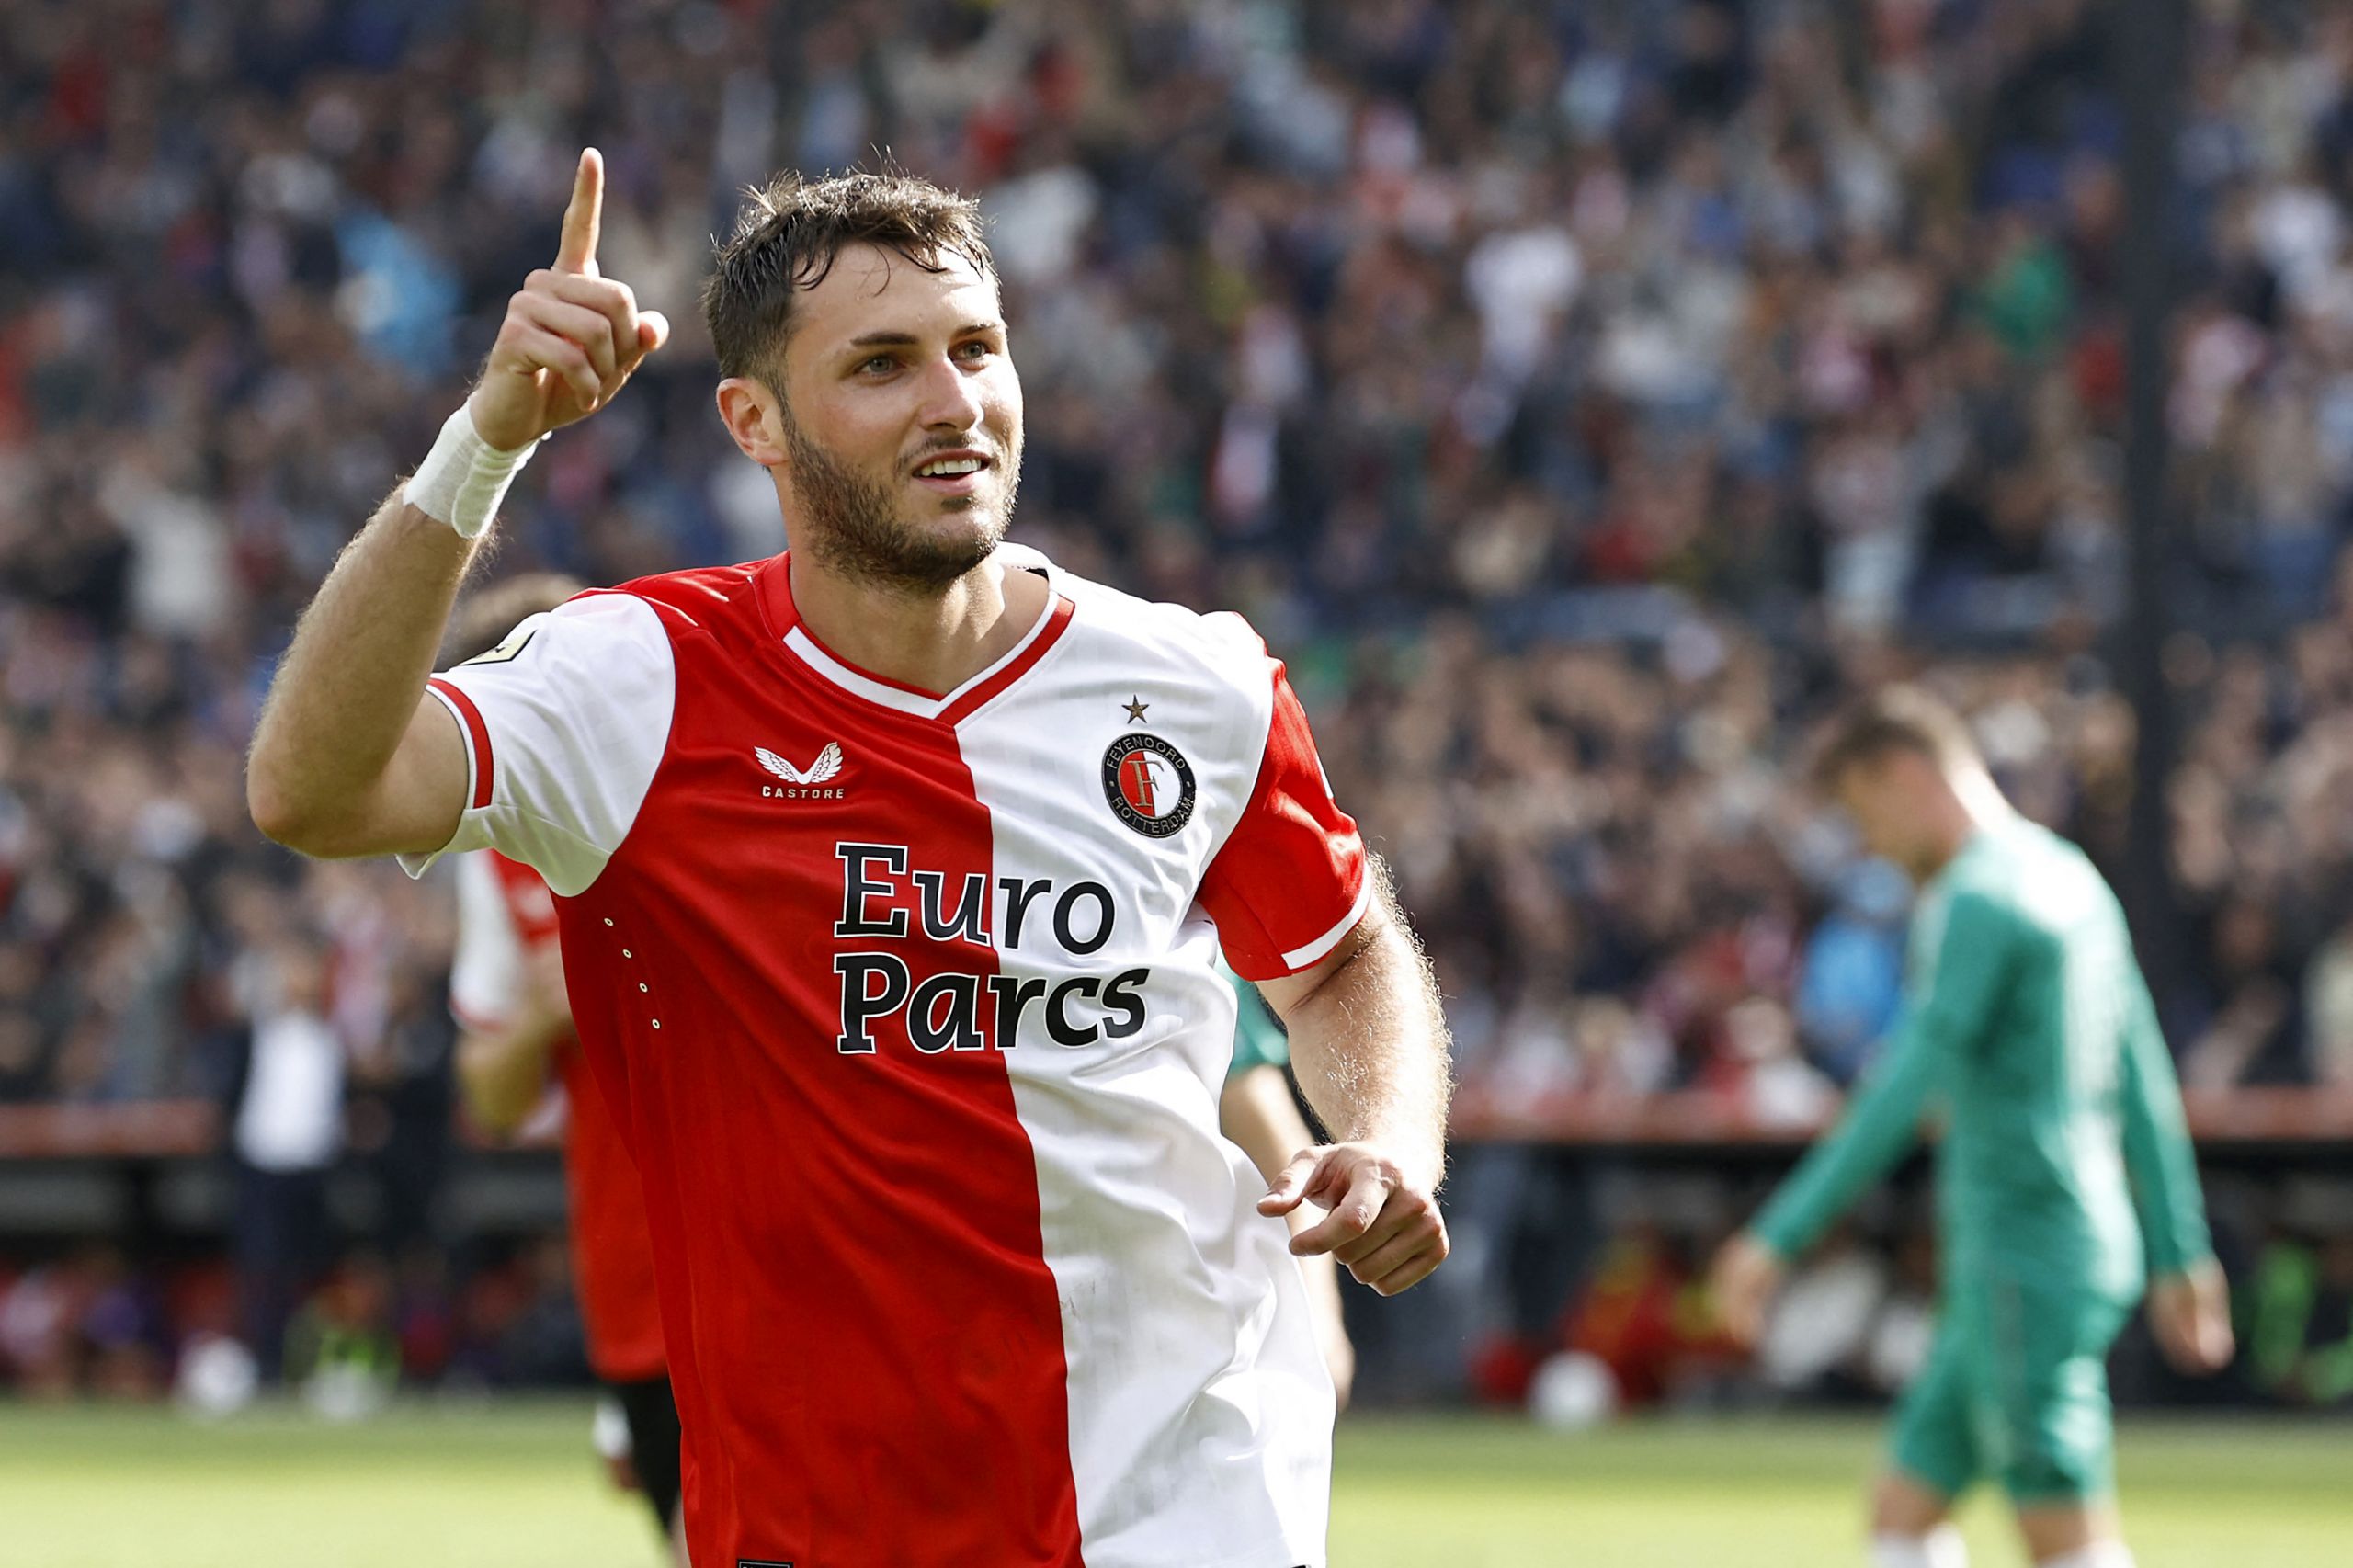 Feyenoord striker Santiago Gimenez open to Inter move